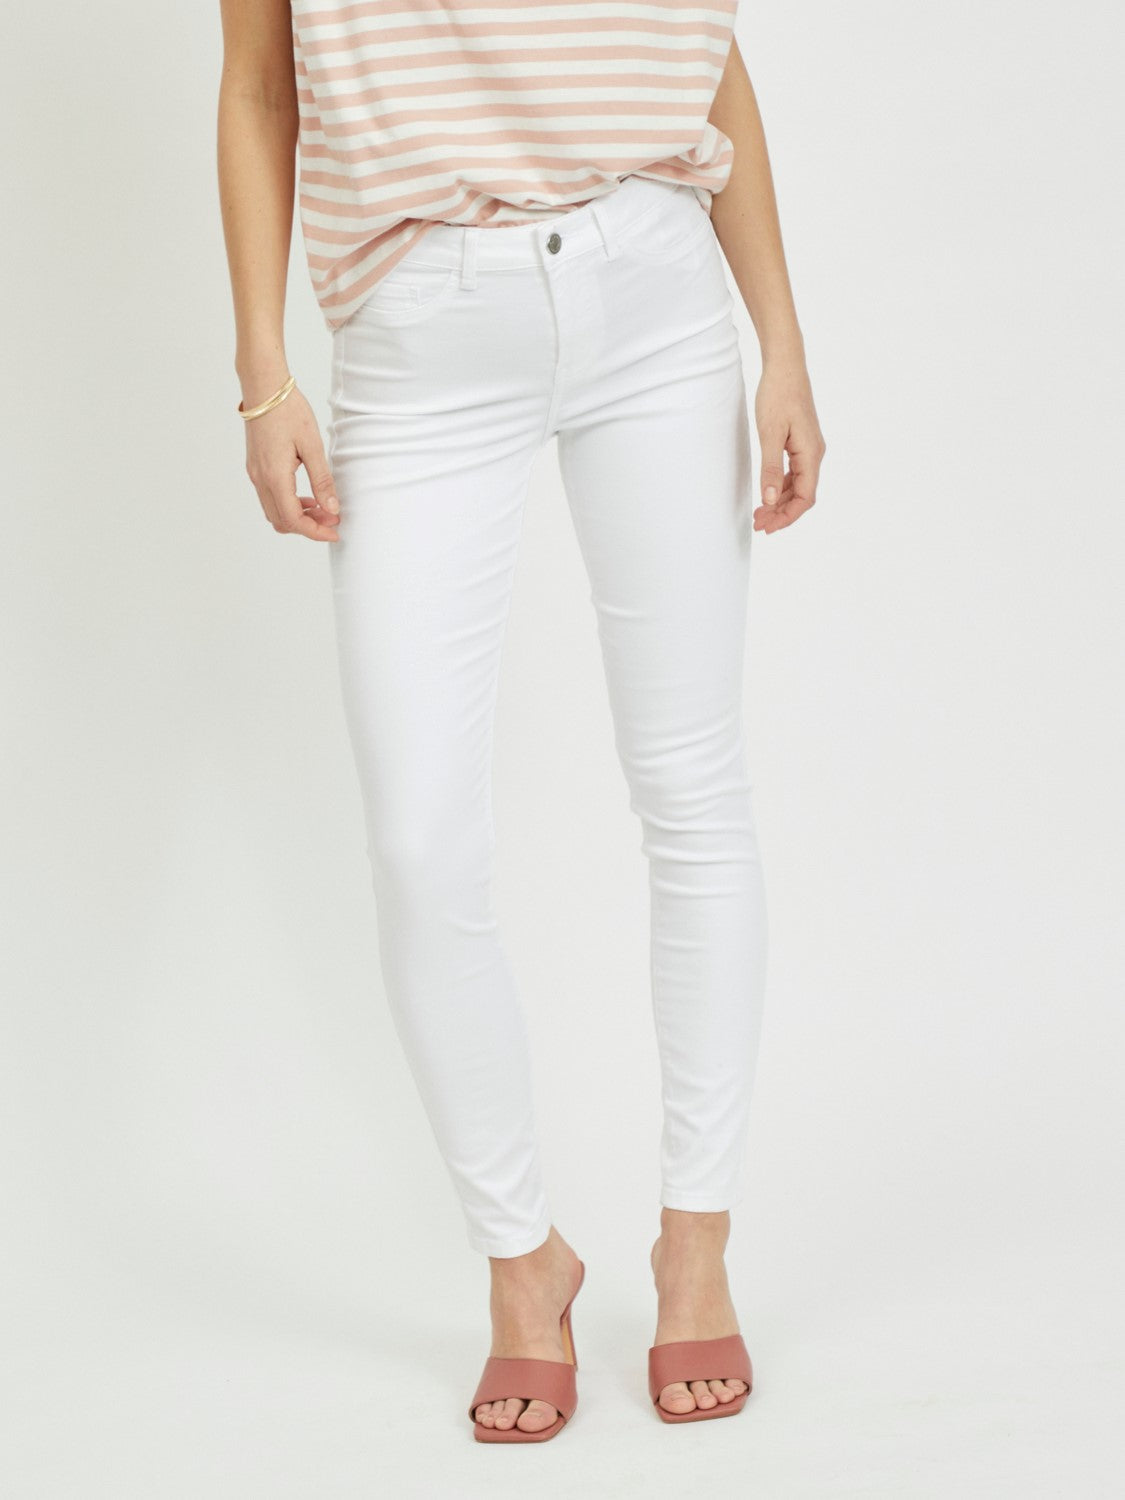 Tori Regular Waist Skinny Jeans (White)